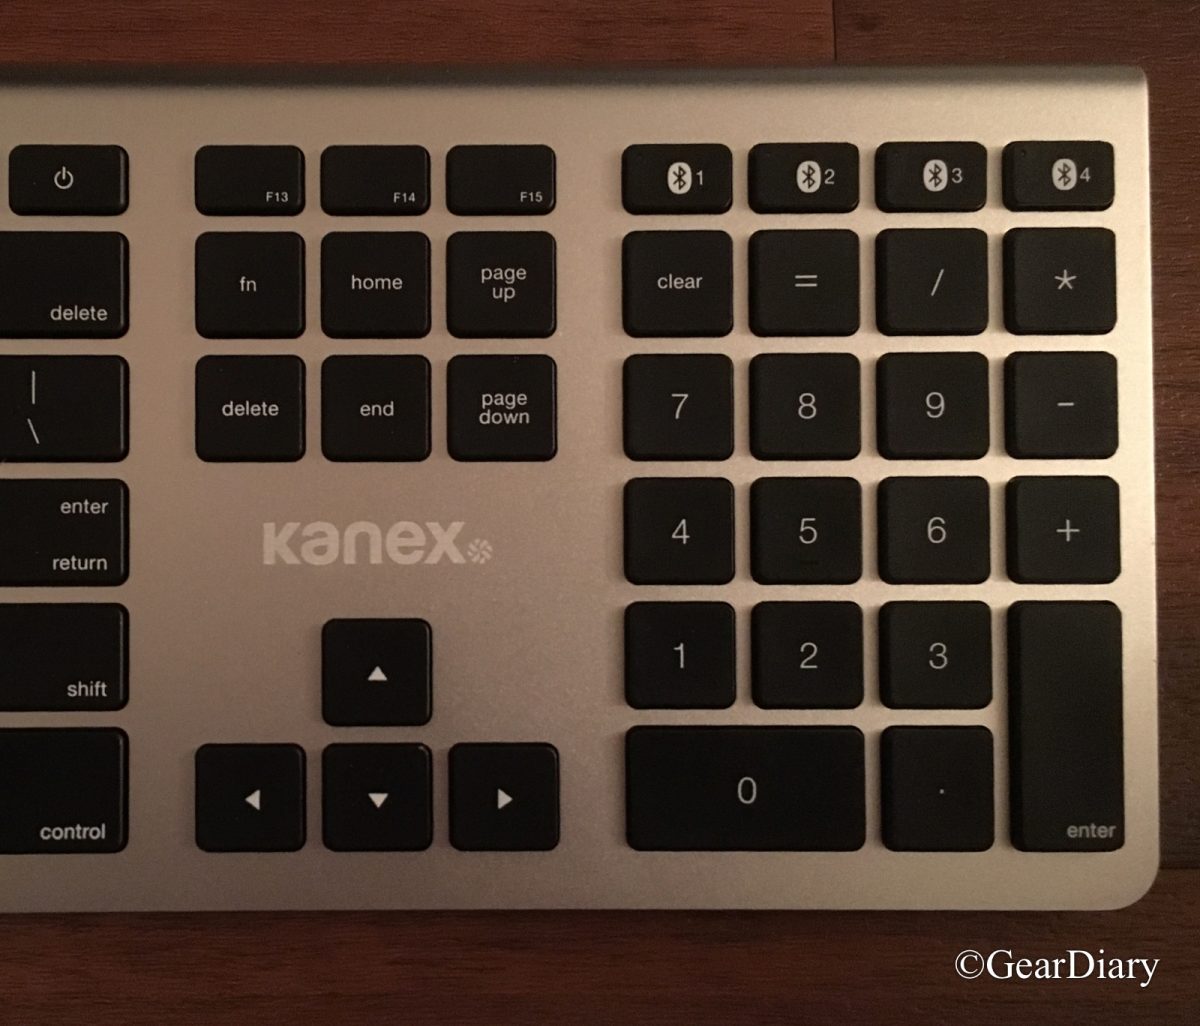 Kanex MultiSync Mac Keyboard Is a Multi-tasking Maven